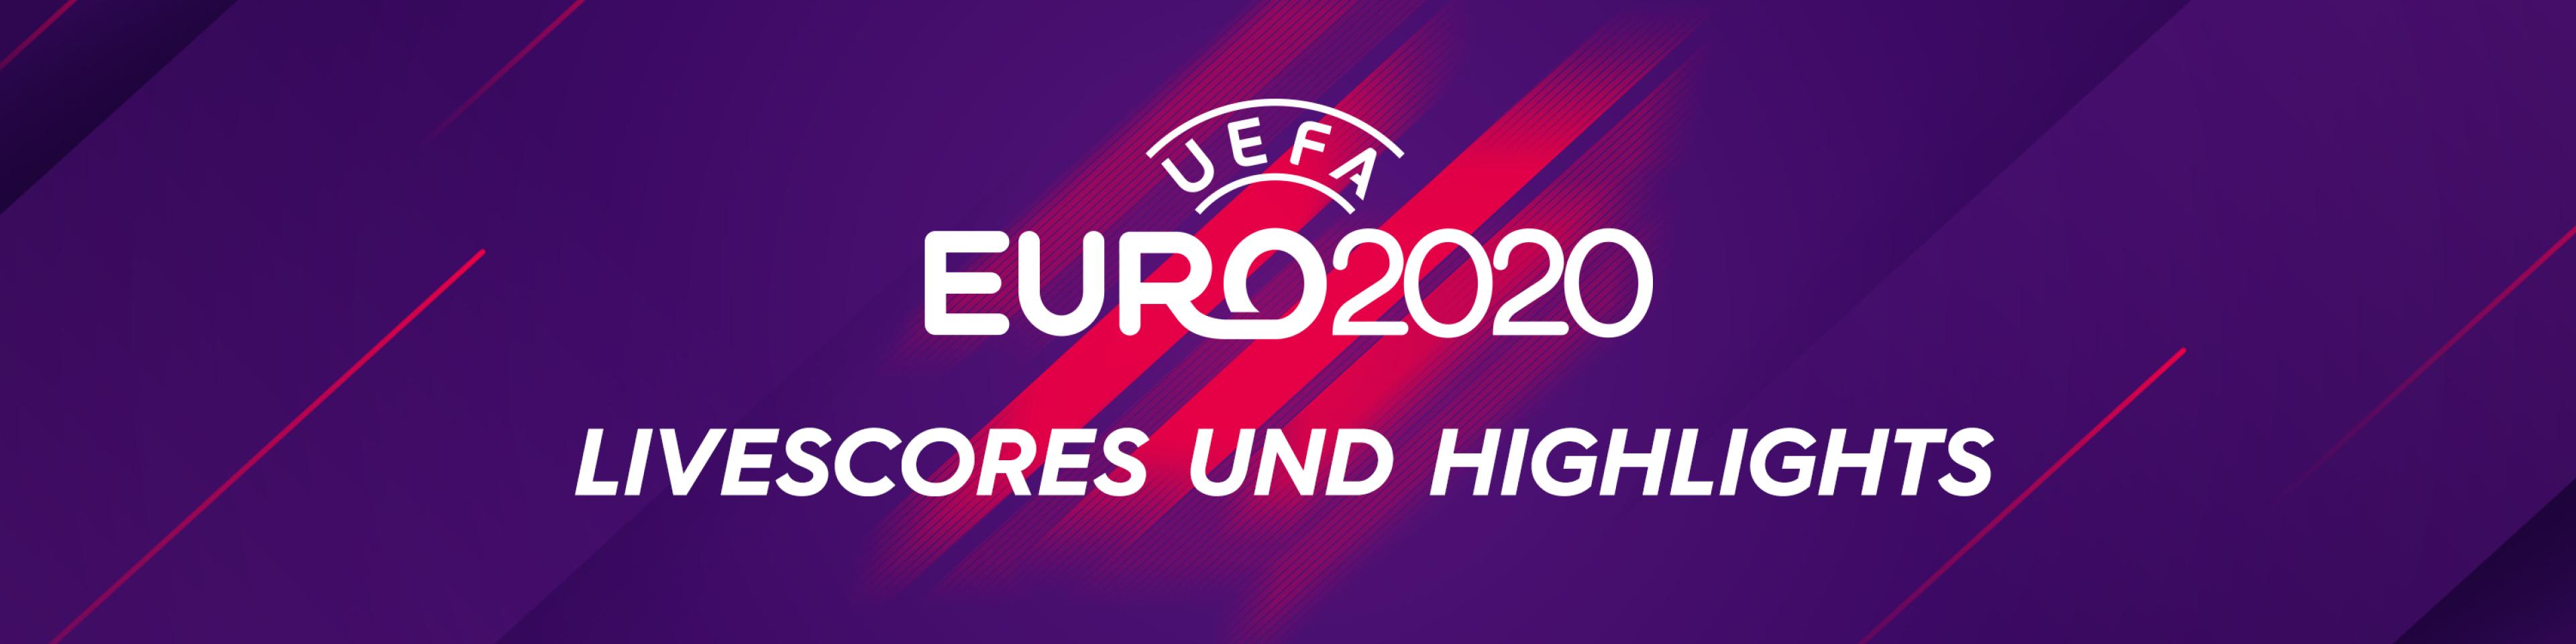 UEFA Euro 2020/21 Livescores und Highlights